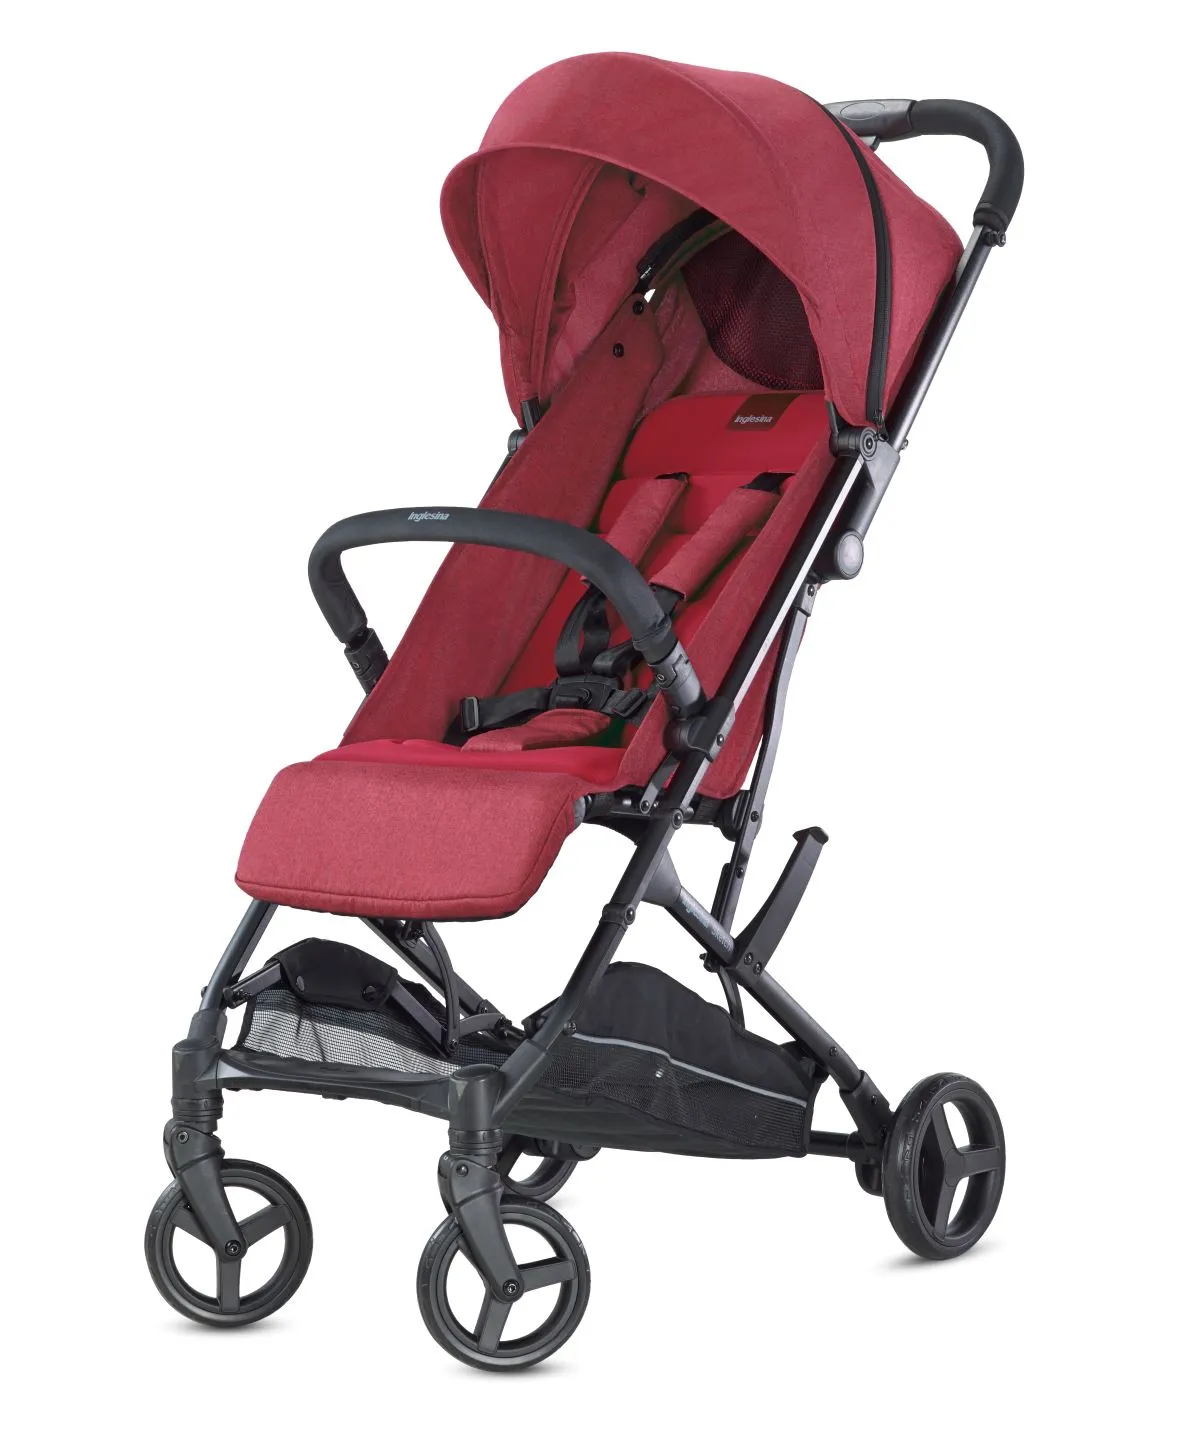 Inglesina Sketch Red - Baby lightweight stroller